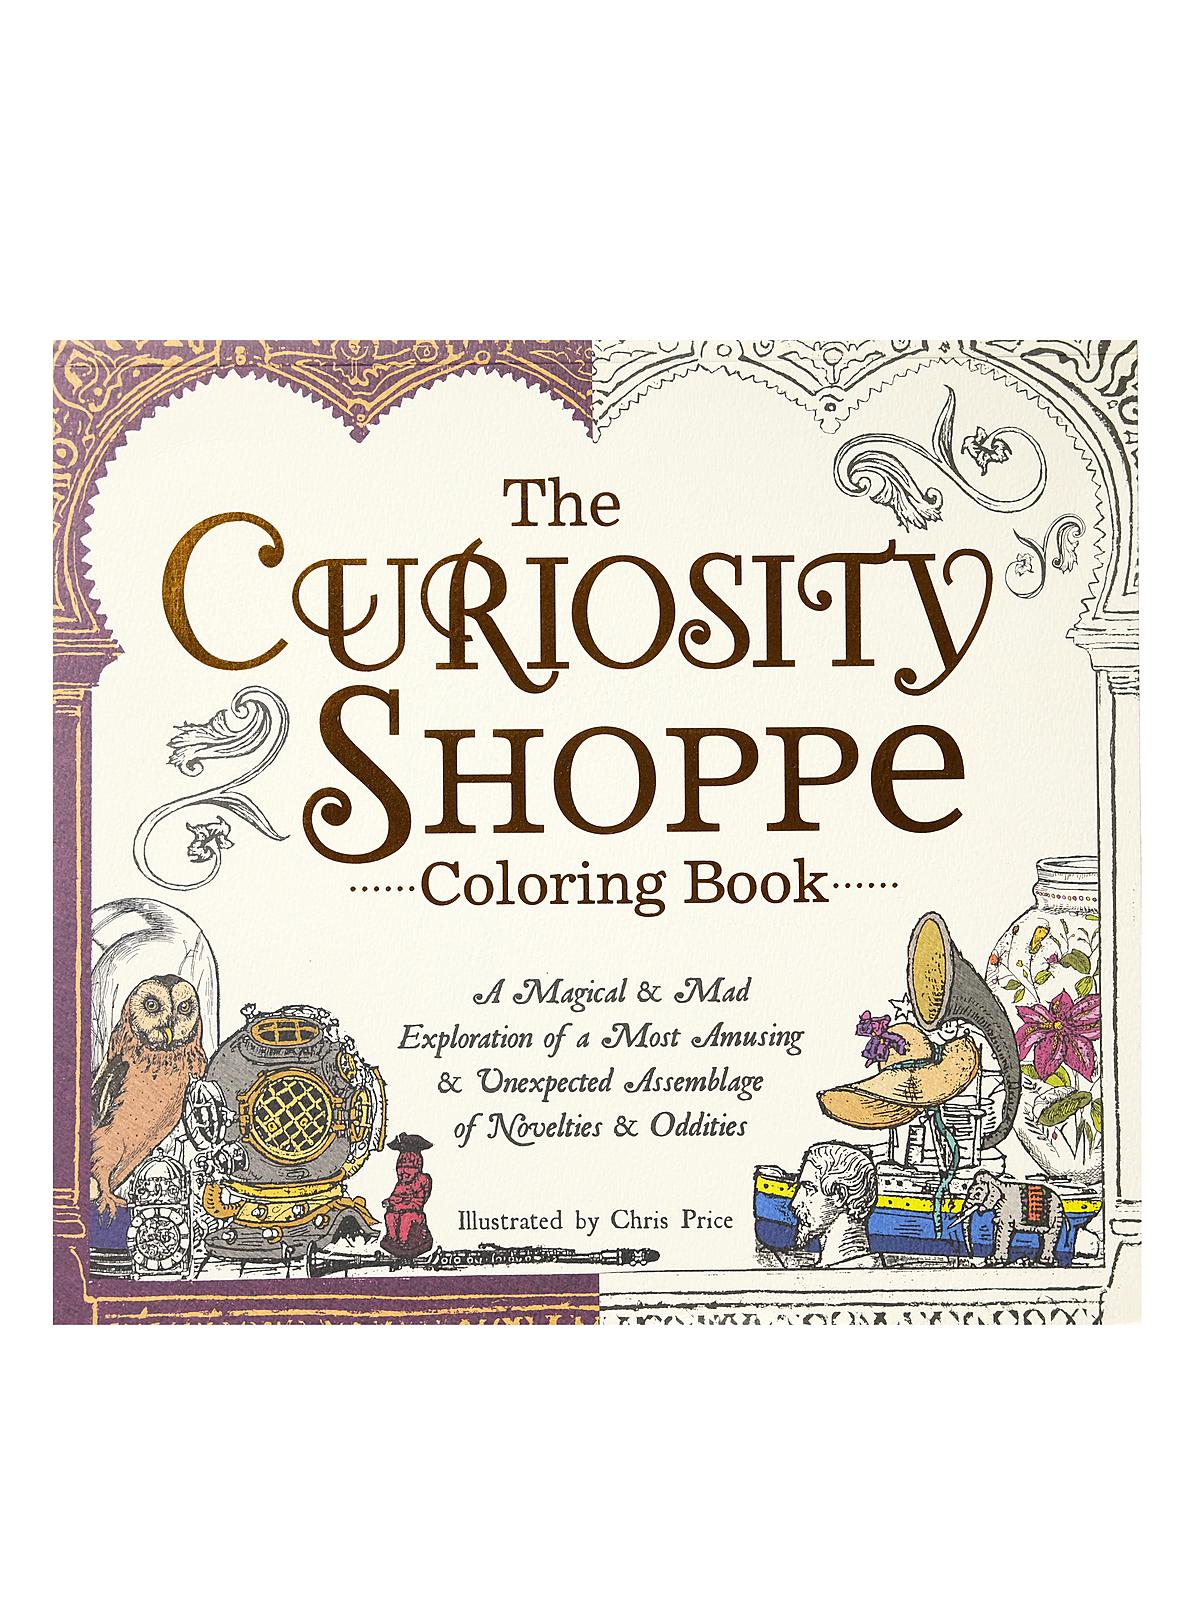 Shoppe Coloring Series Curiosity Shoppe